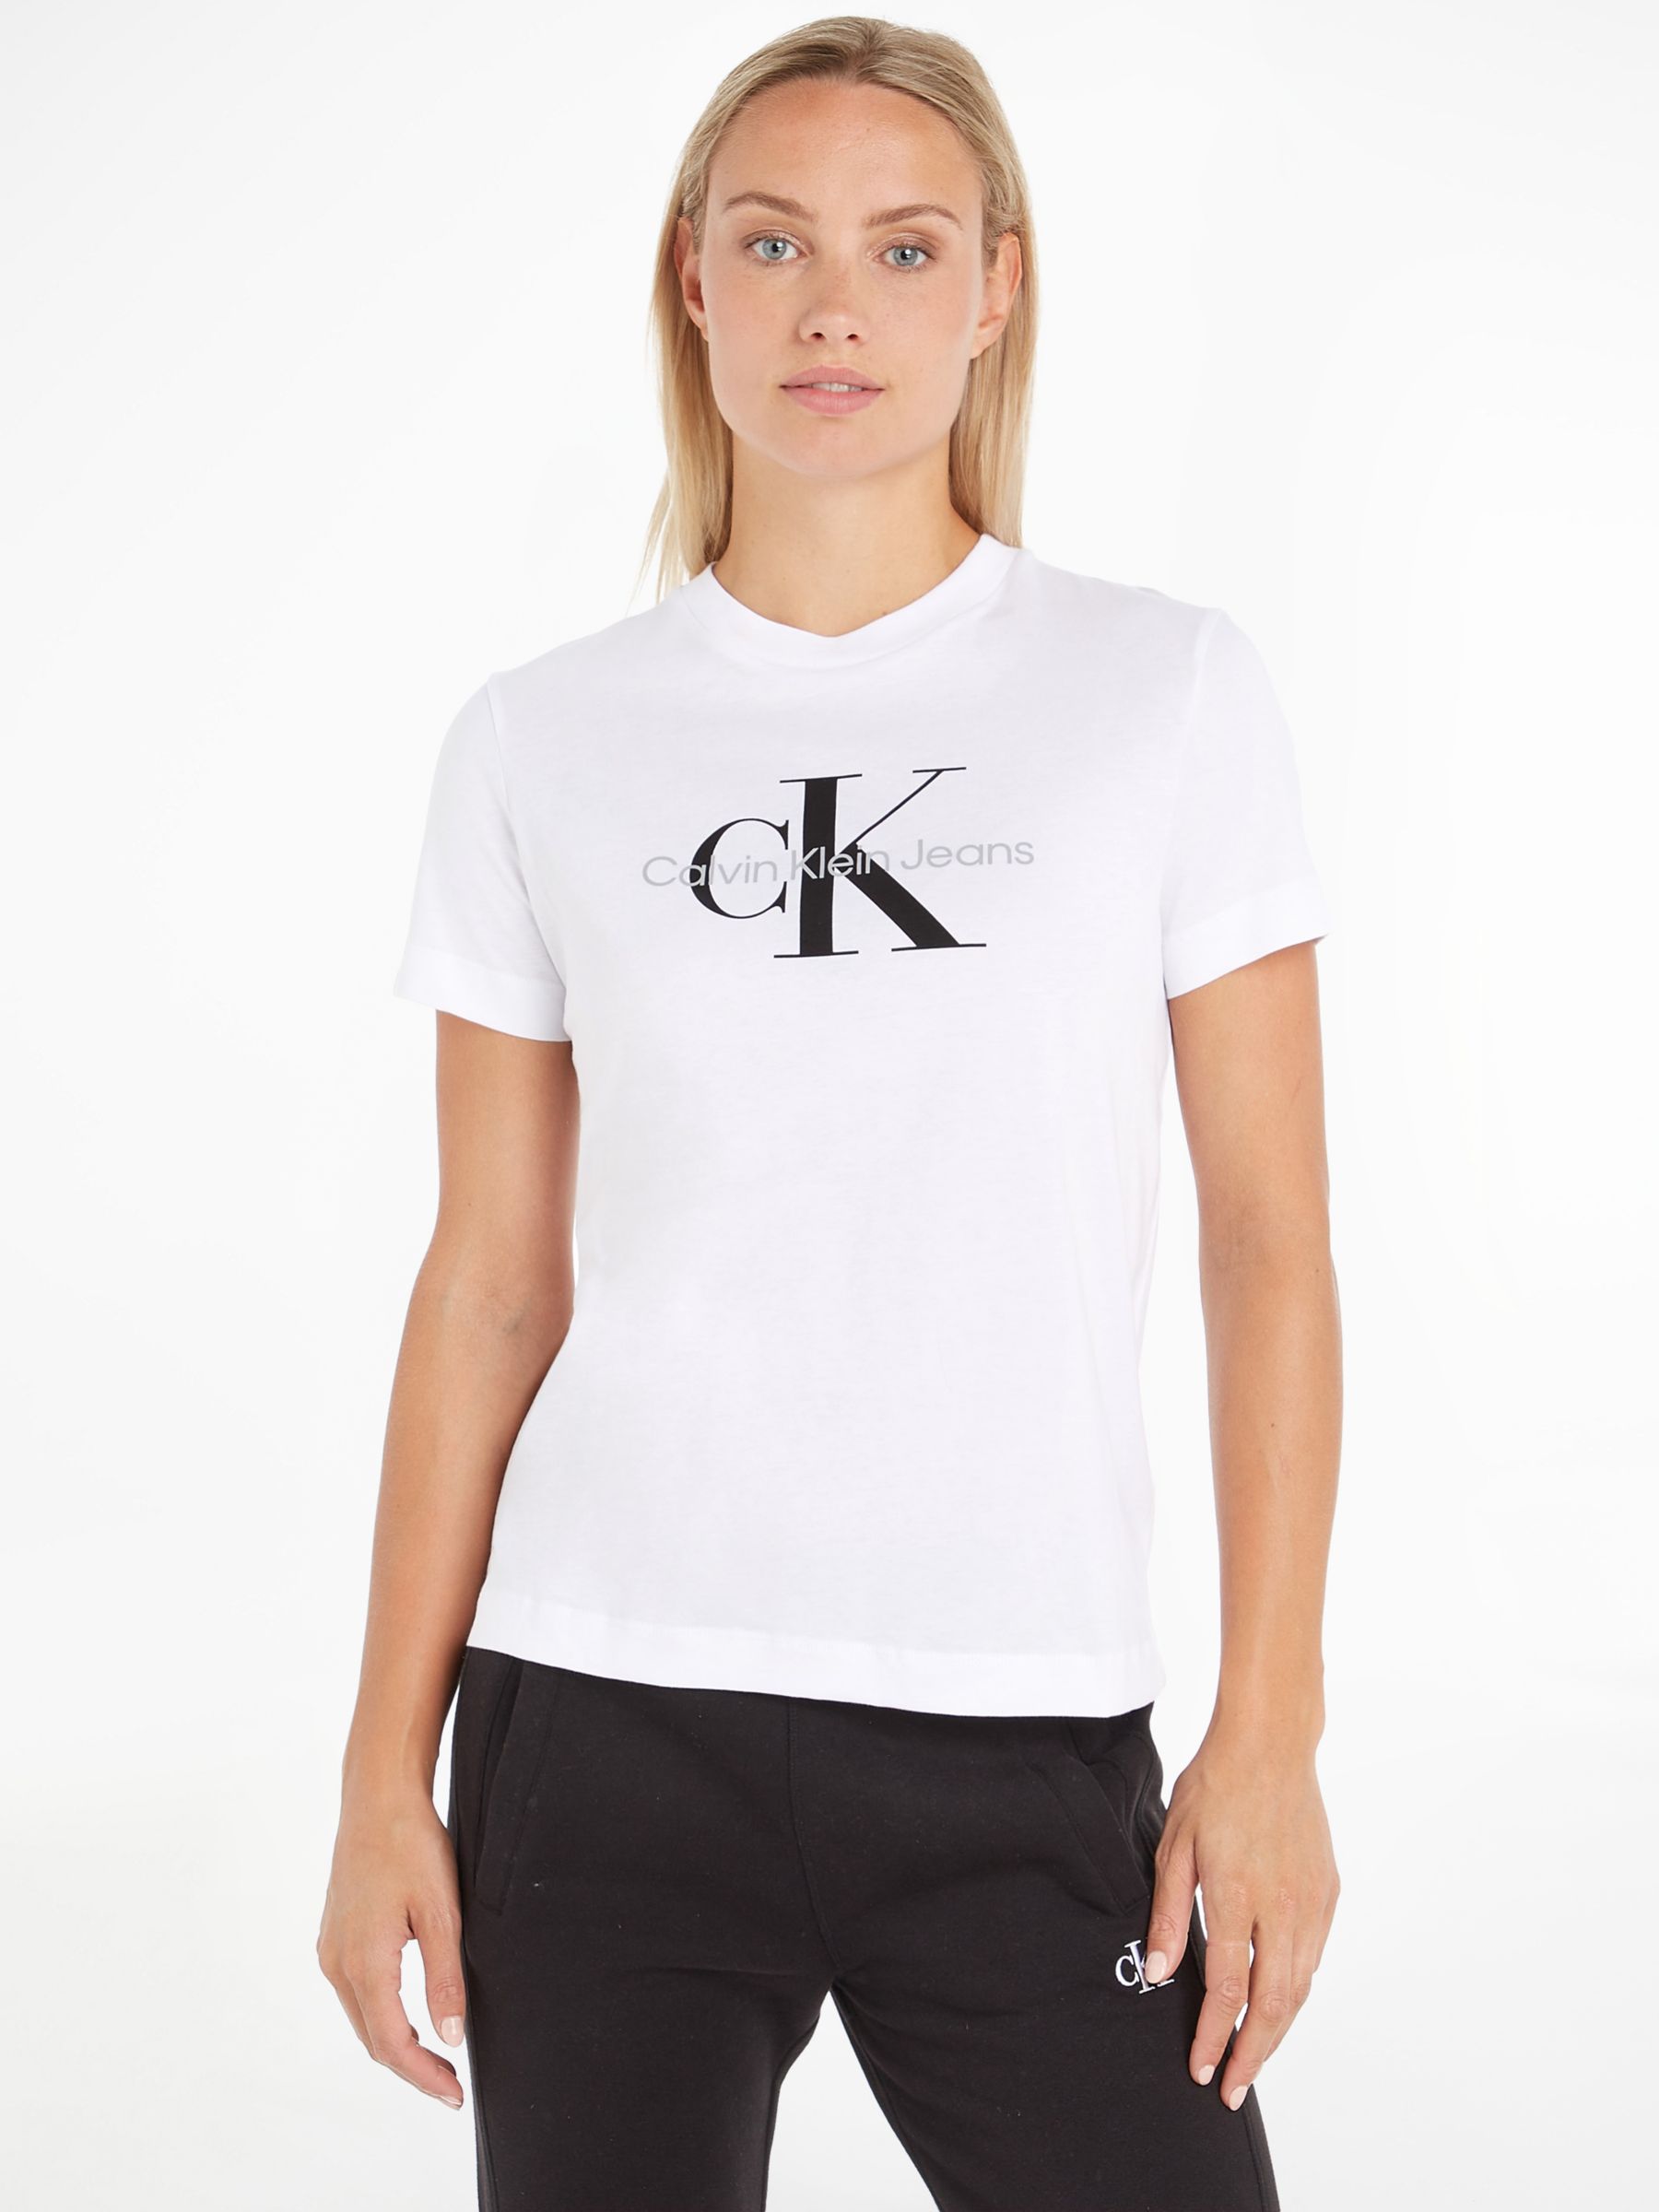 Buy Calvin Klein Jeans Women Black Crew Neck Monogram Logo Sweatshirt -  NNNOW.com